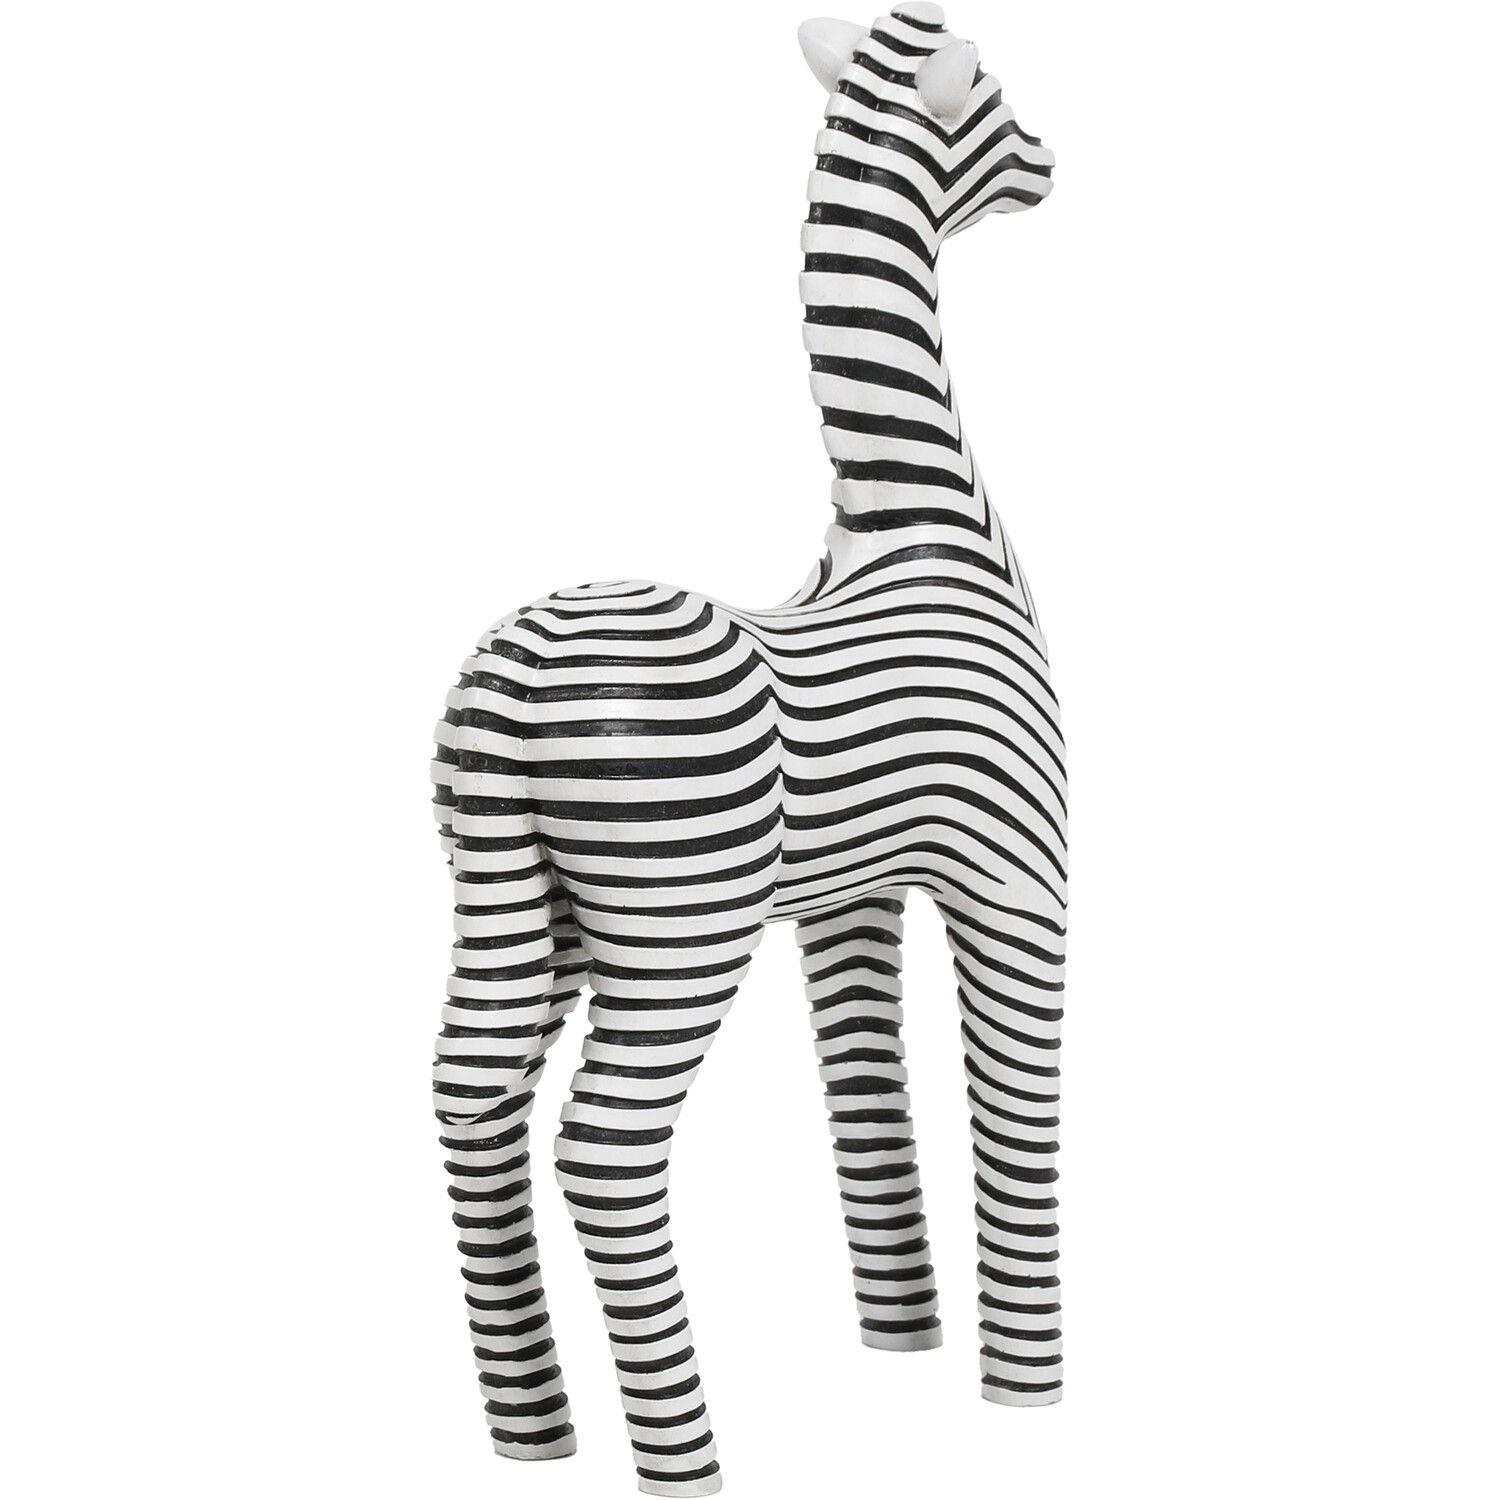 Black and White Zebra Ornament Image 2